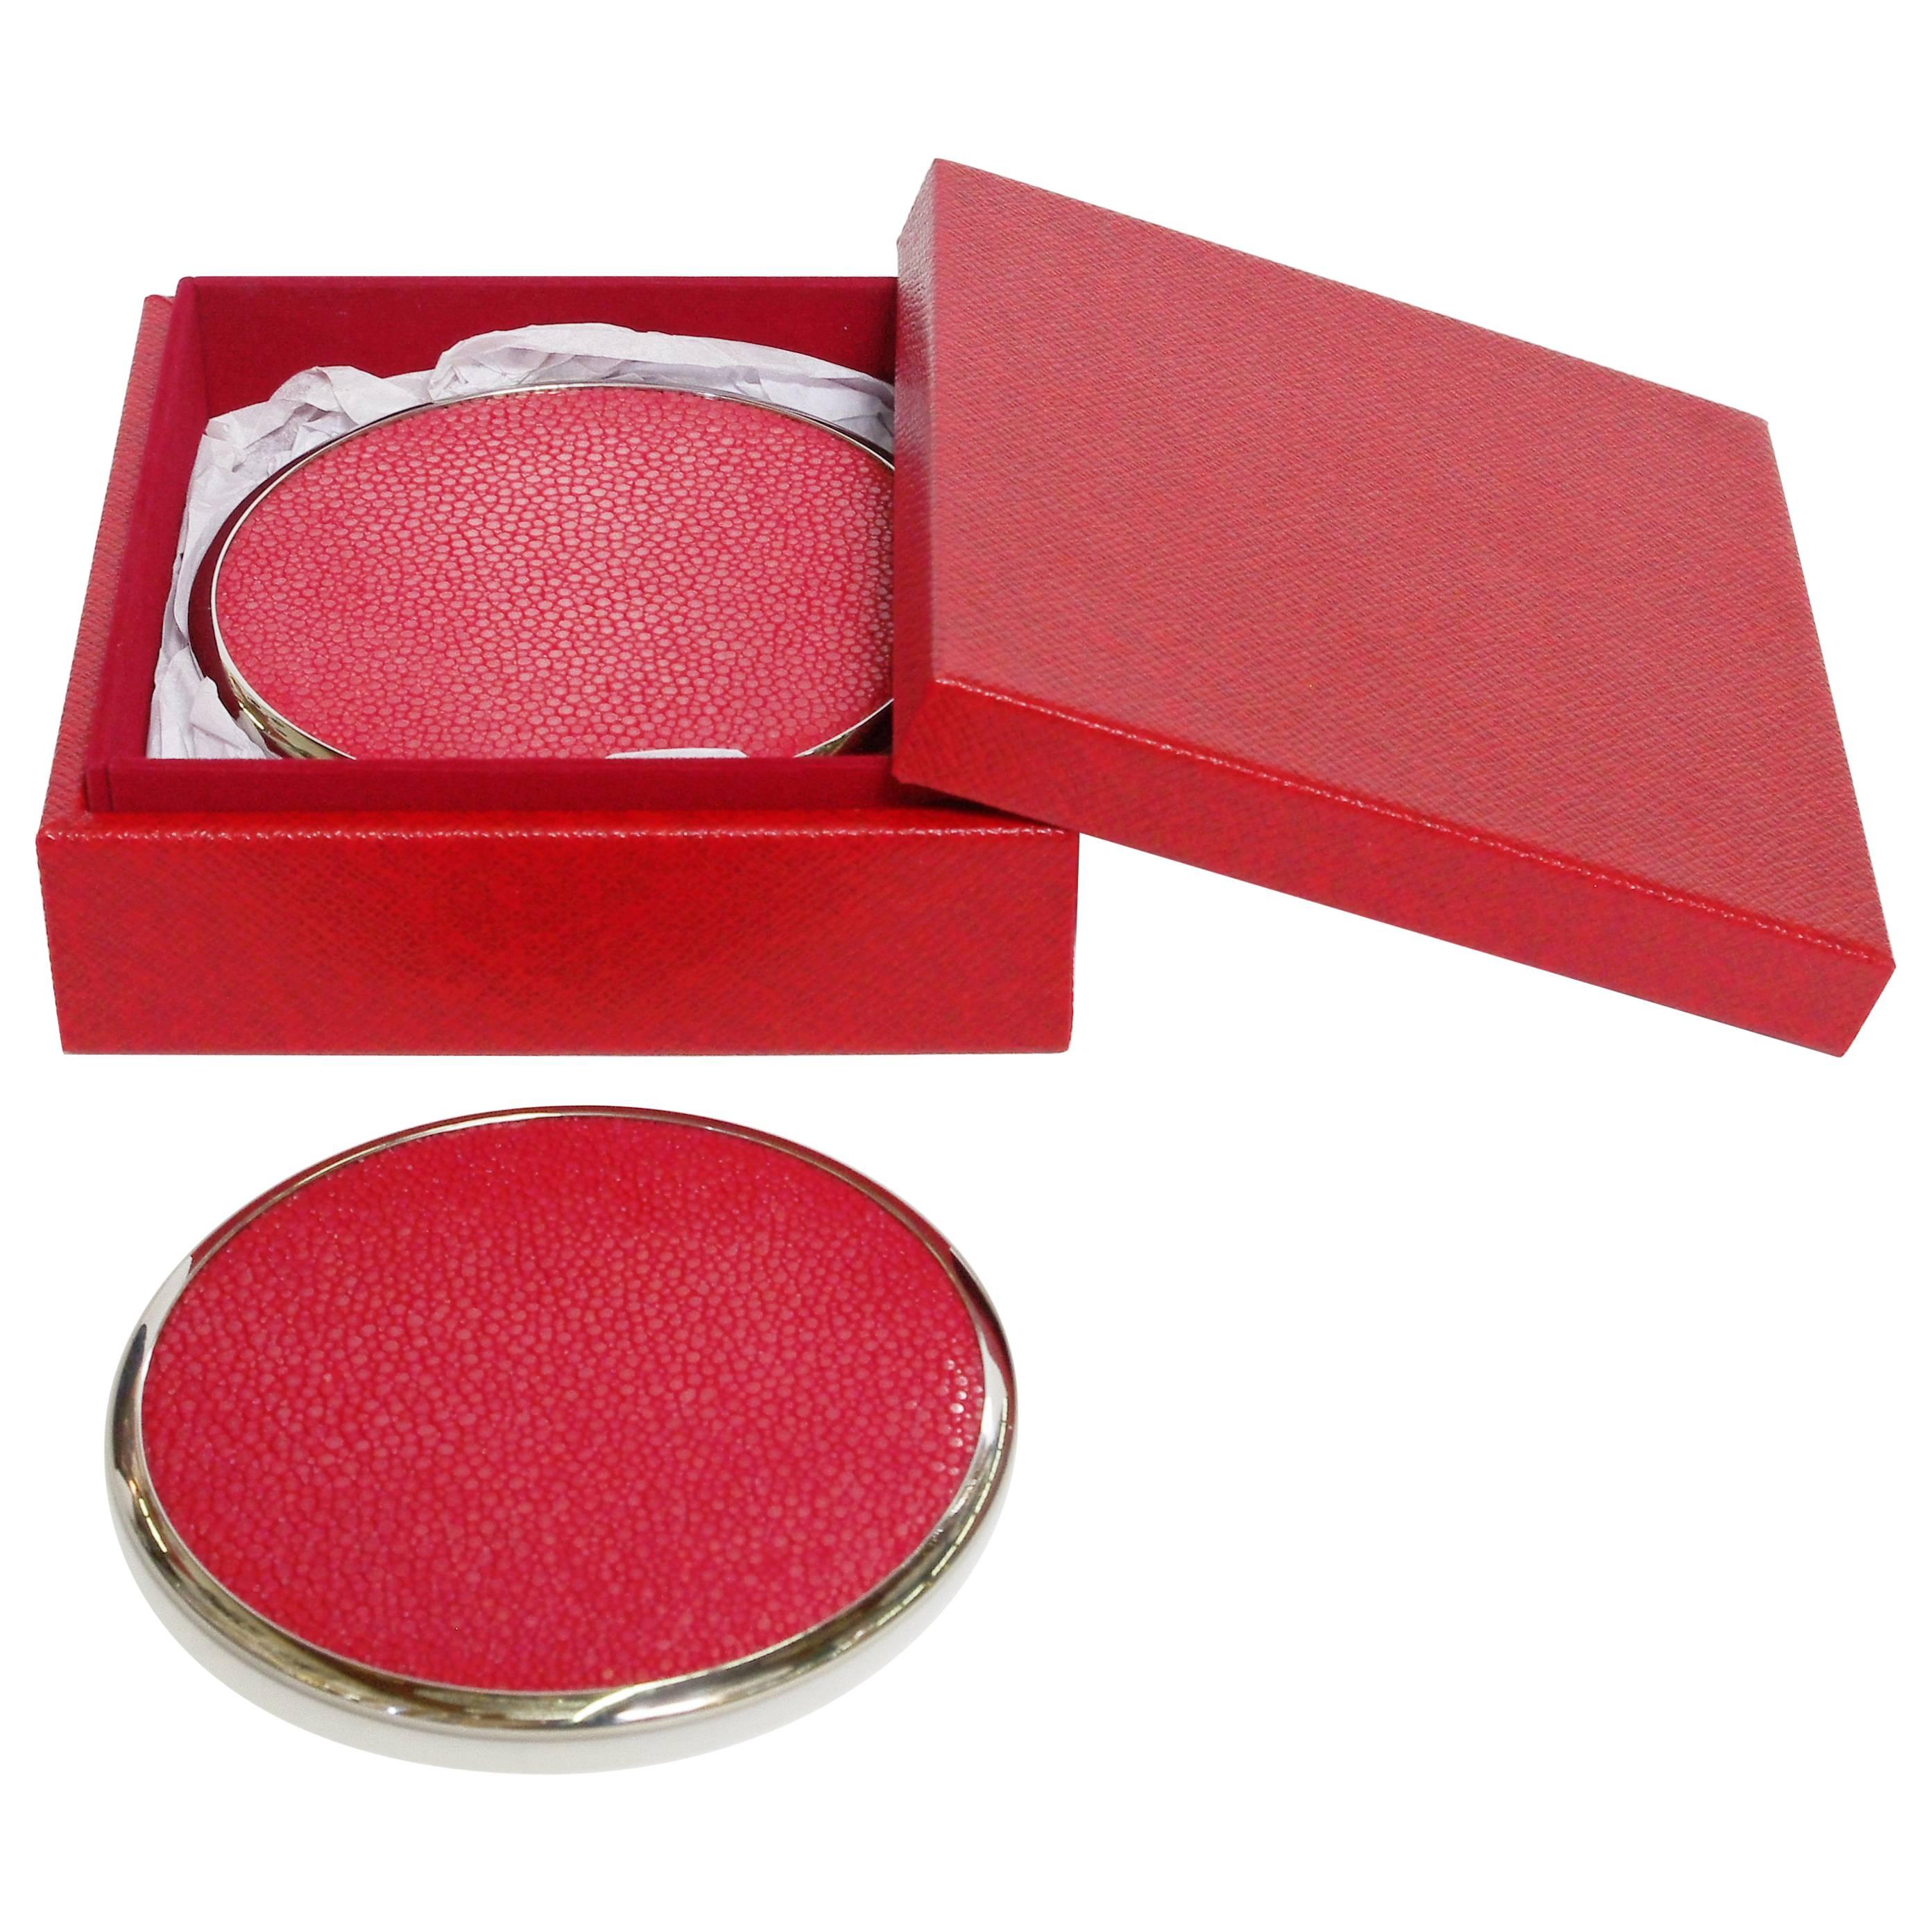 Six-Piece Set of Red Shagreen Coasters by Fabio Ltd